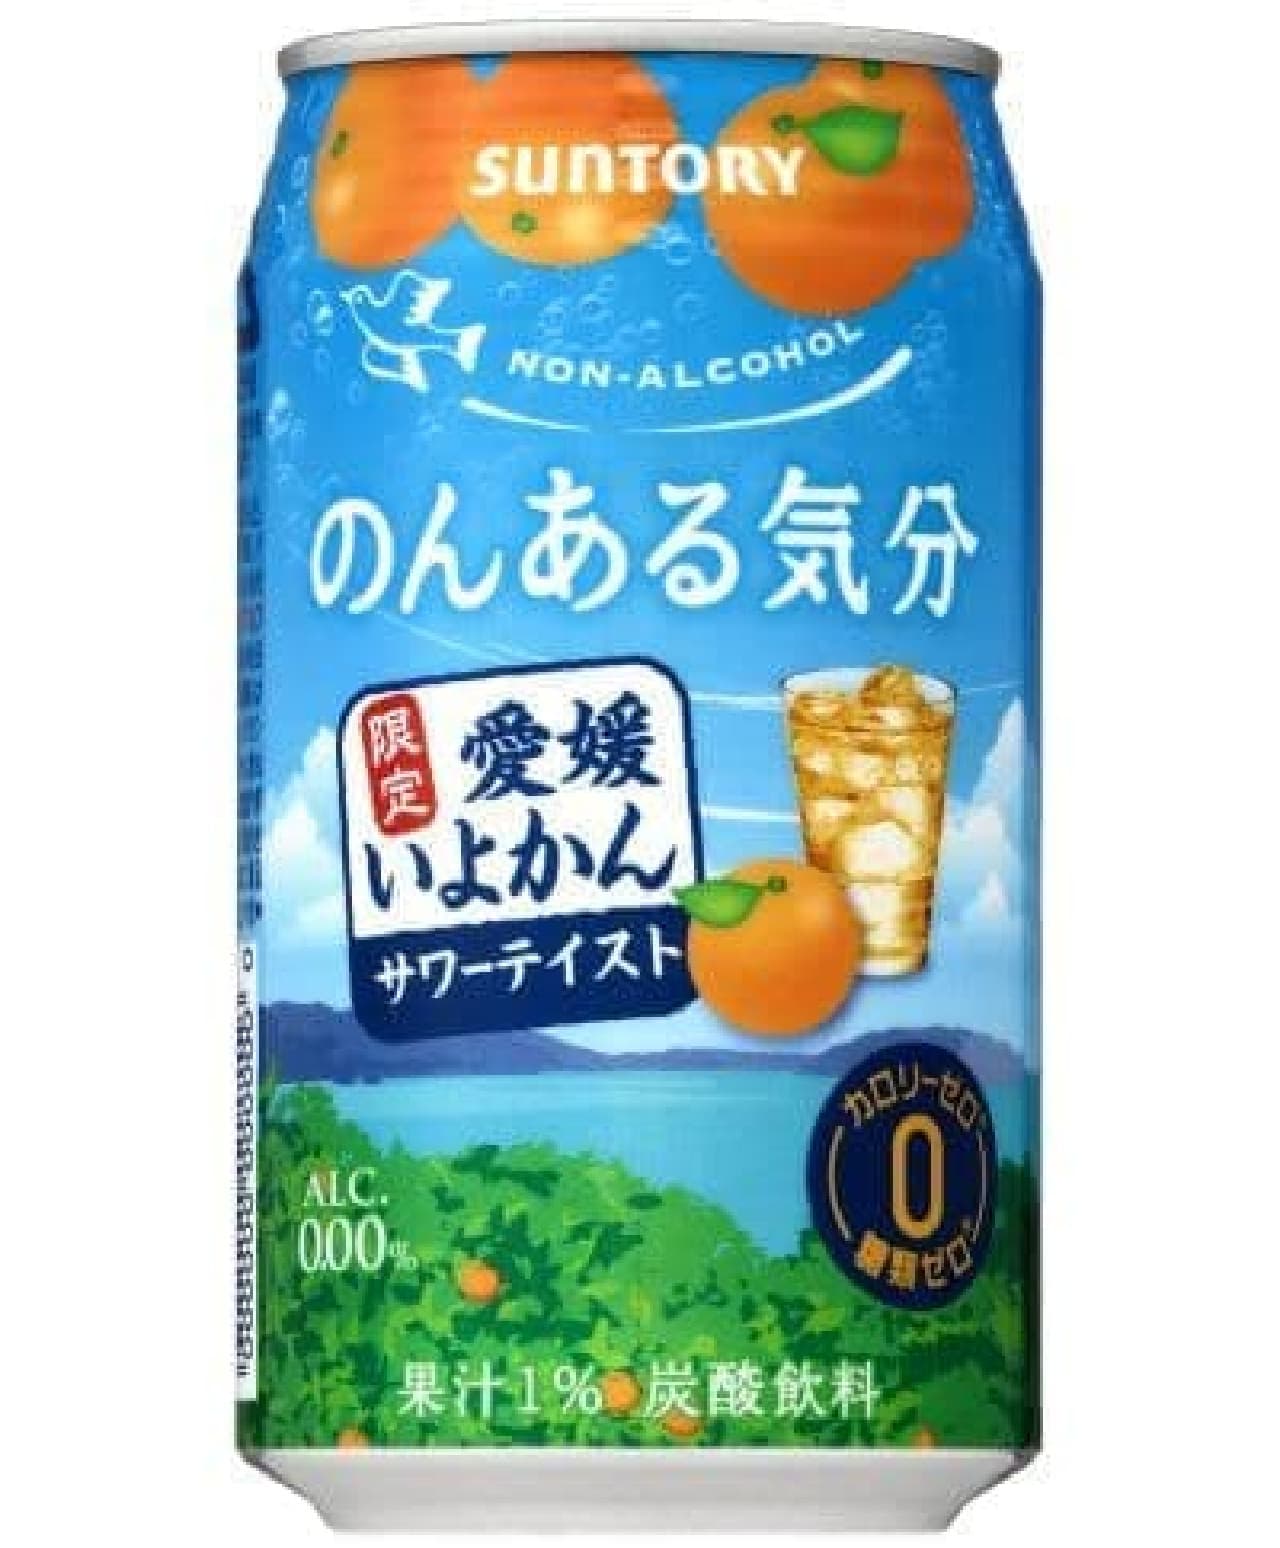 Suntory "Non-Aru Mood Ehime Iyokan Sour Taste"